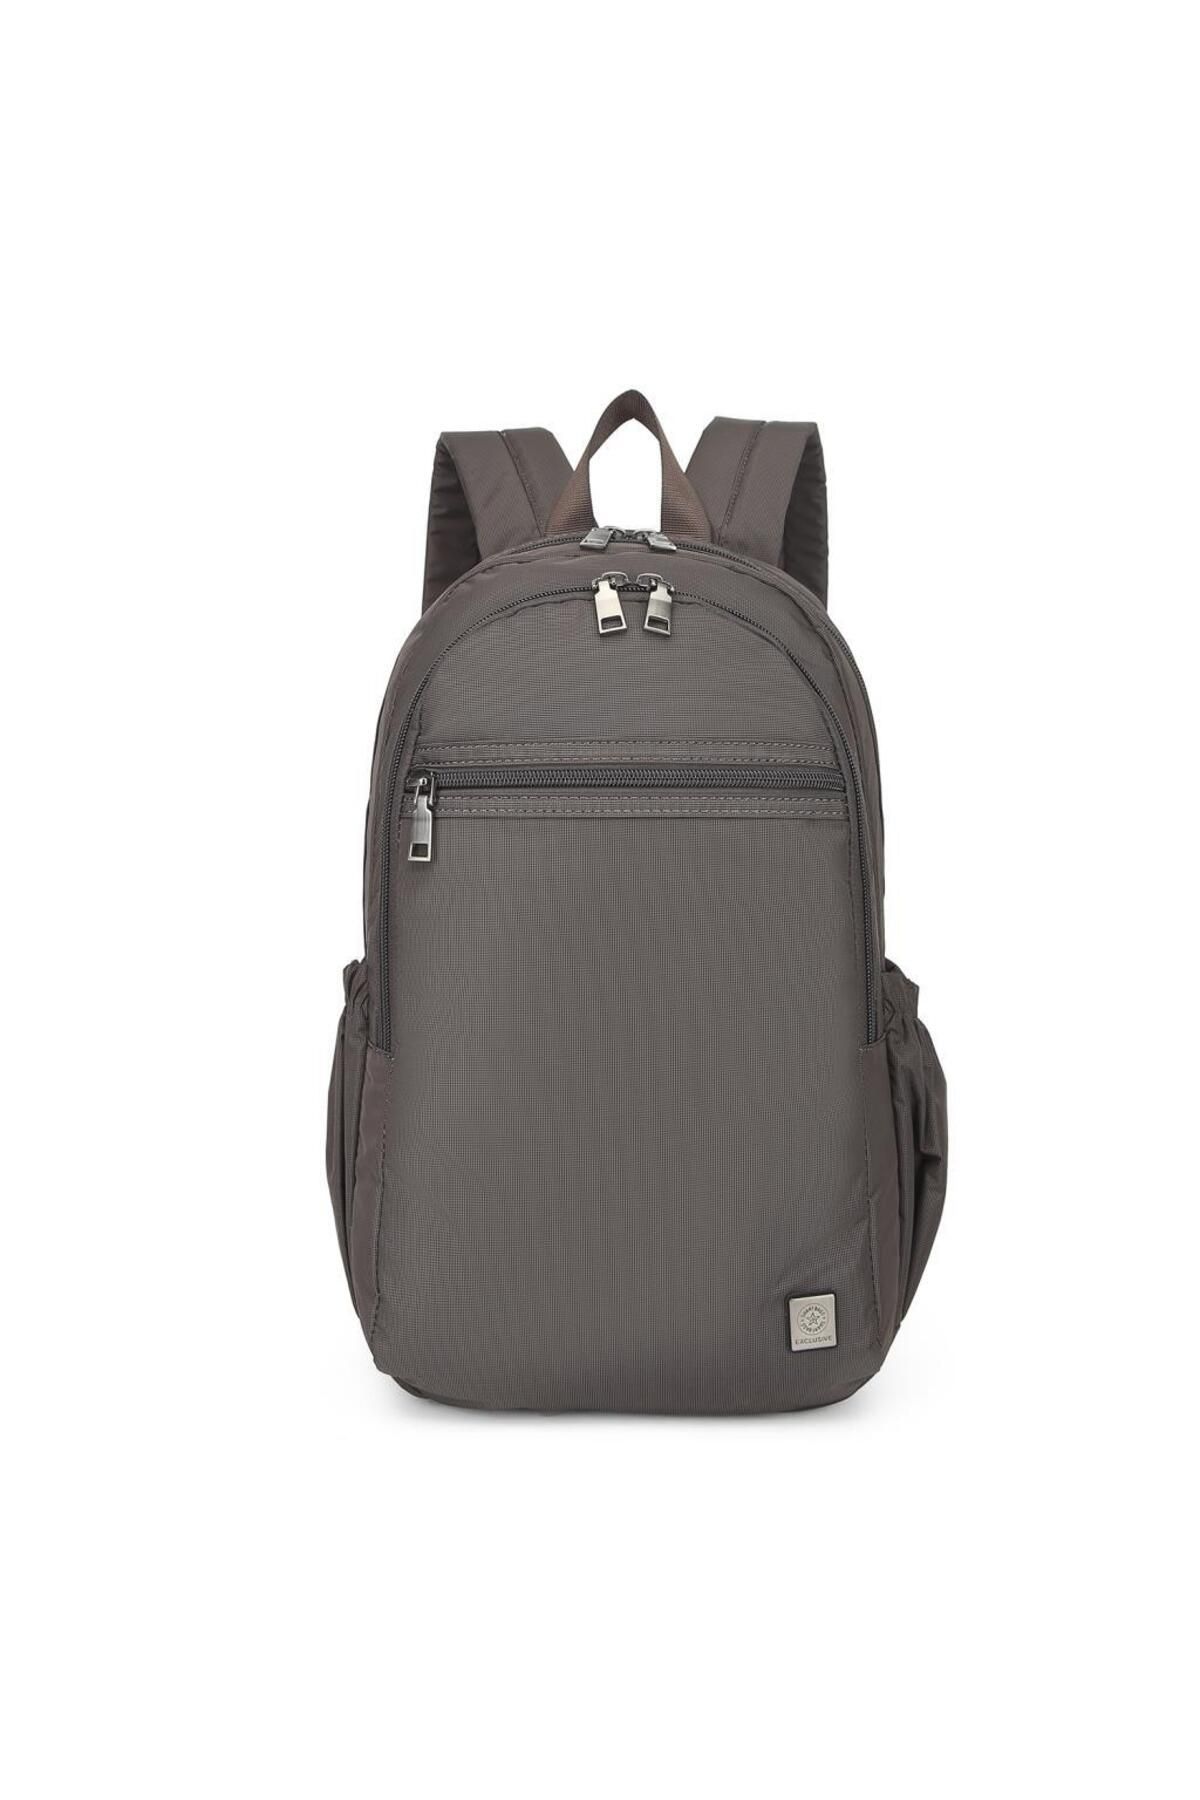 Smart Bags Exclusive Serisi Uniseks Sırt Çantası Smart Bags 8711